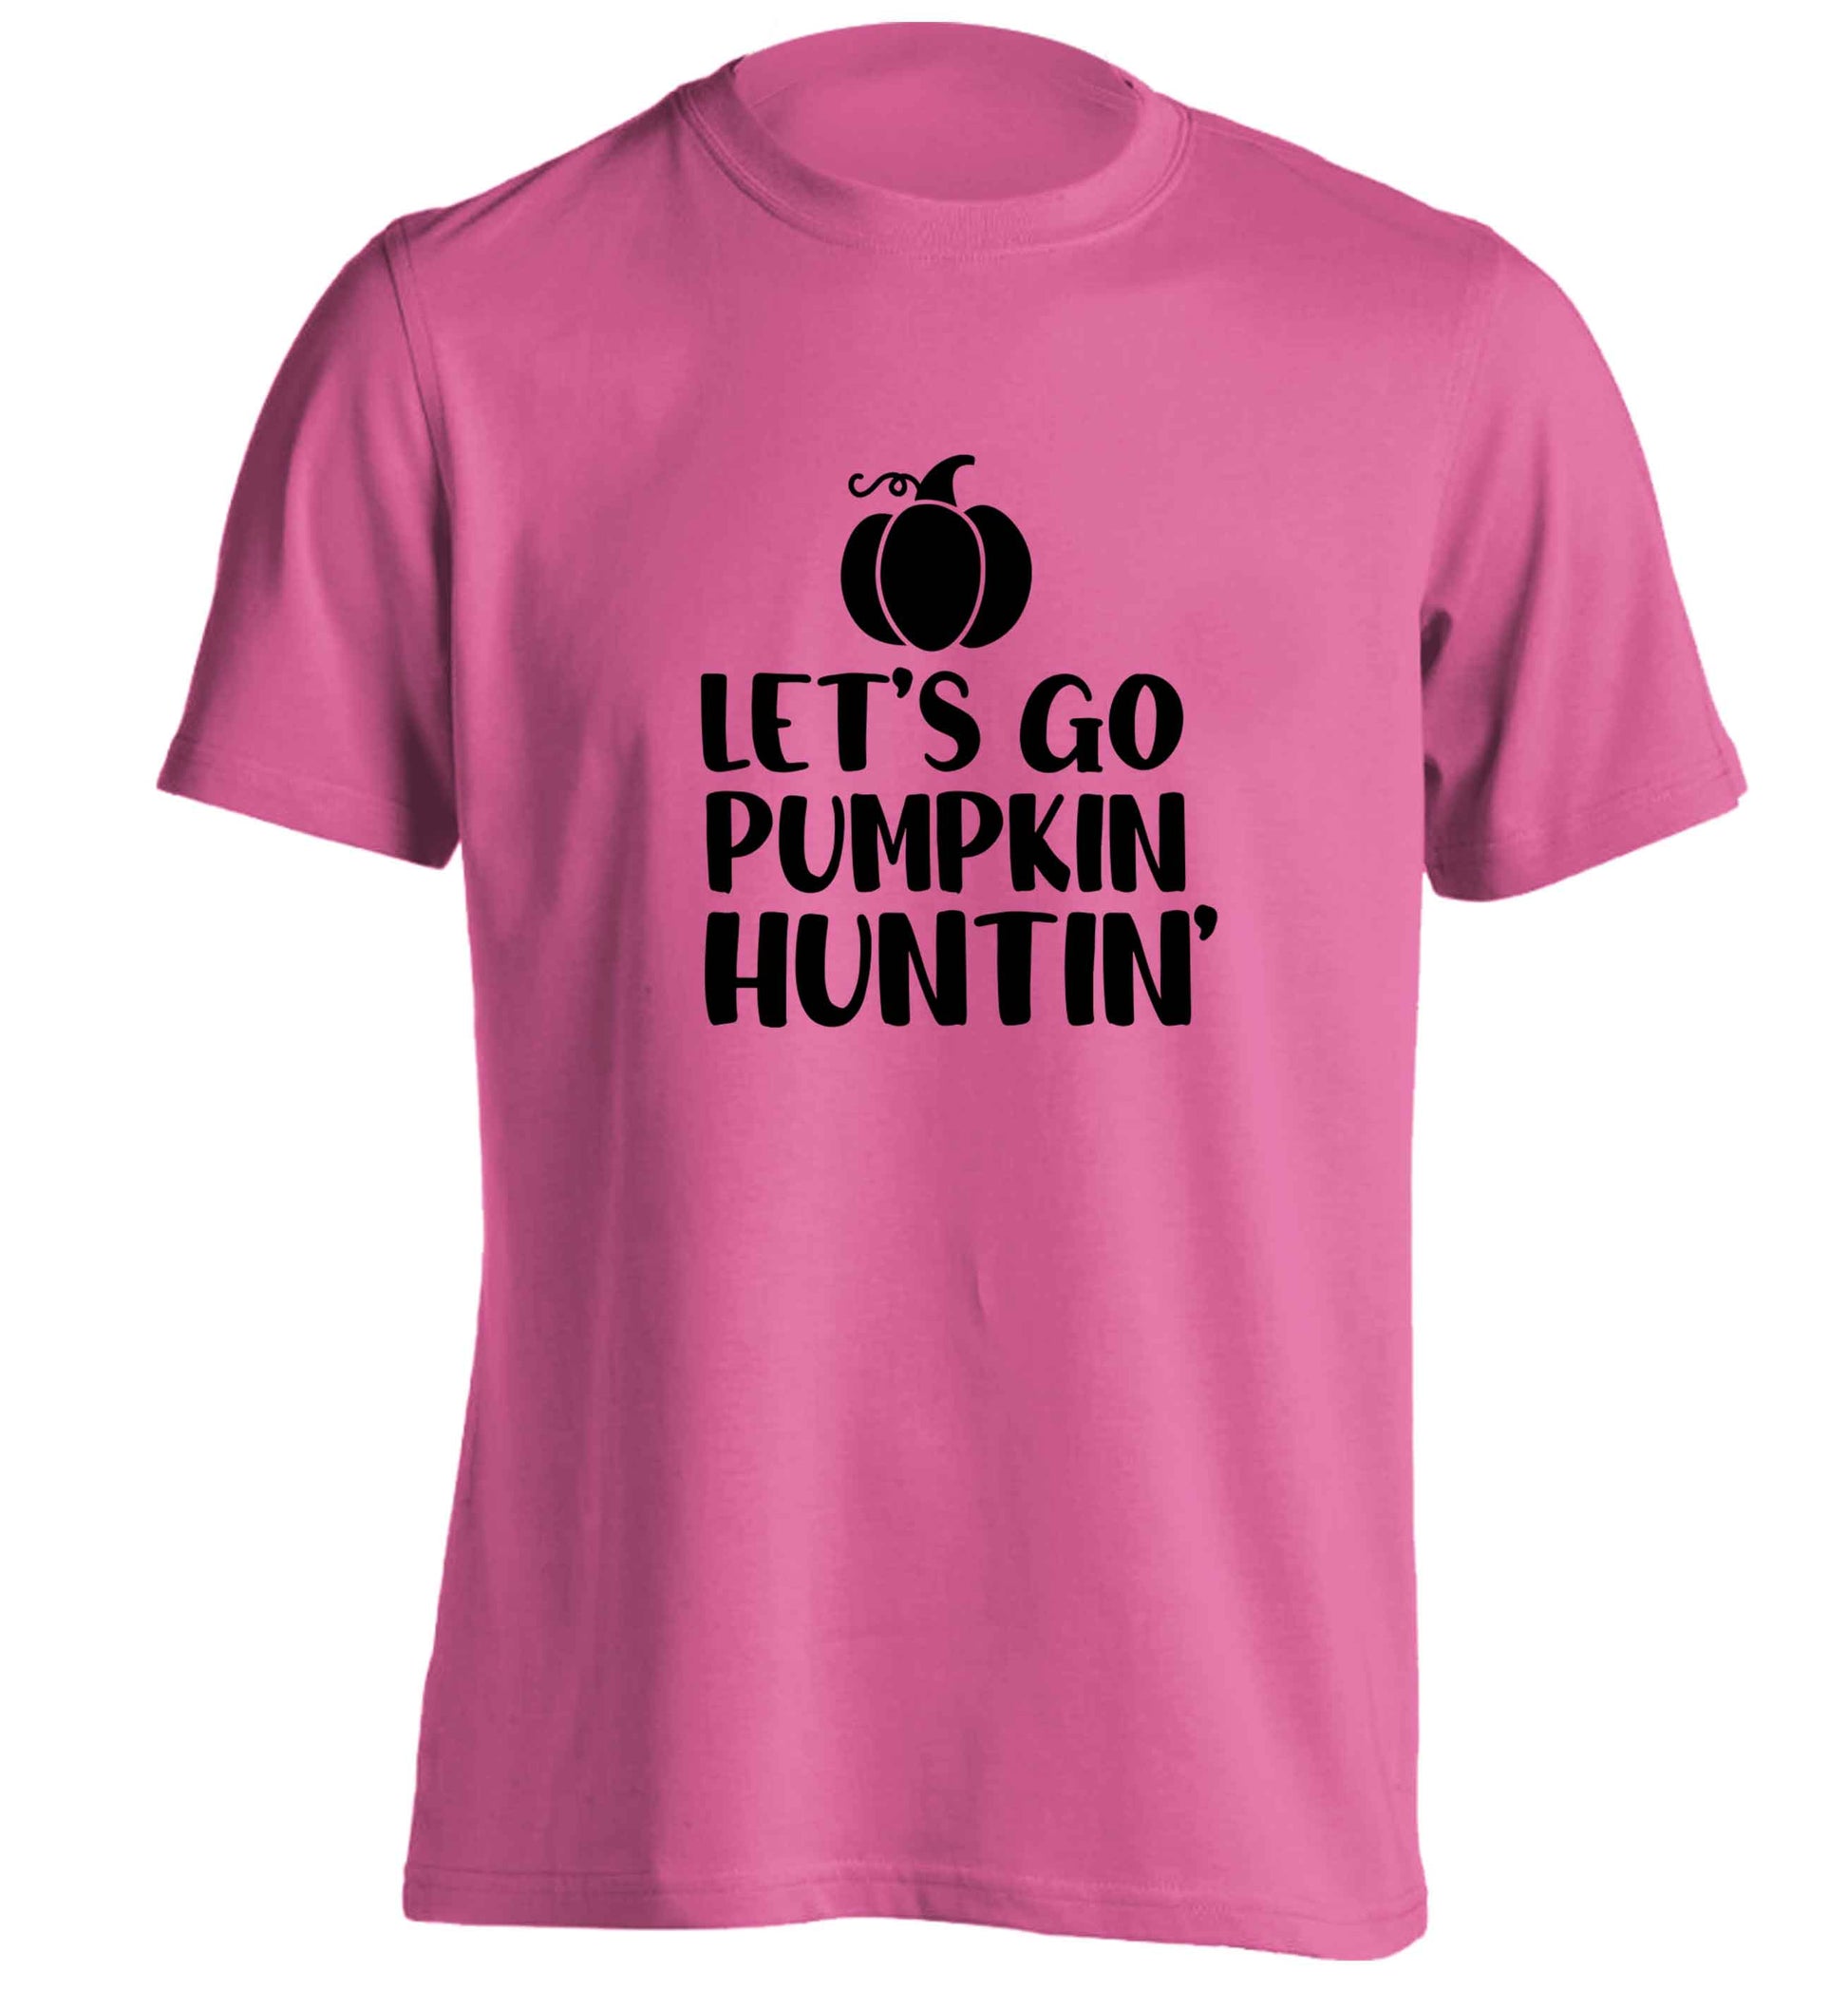 Let's go Pumpkin Huntin'adults unisex pink Tshirt 2XL